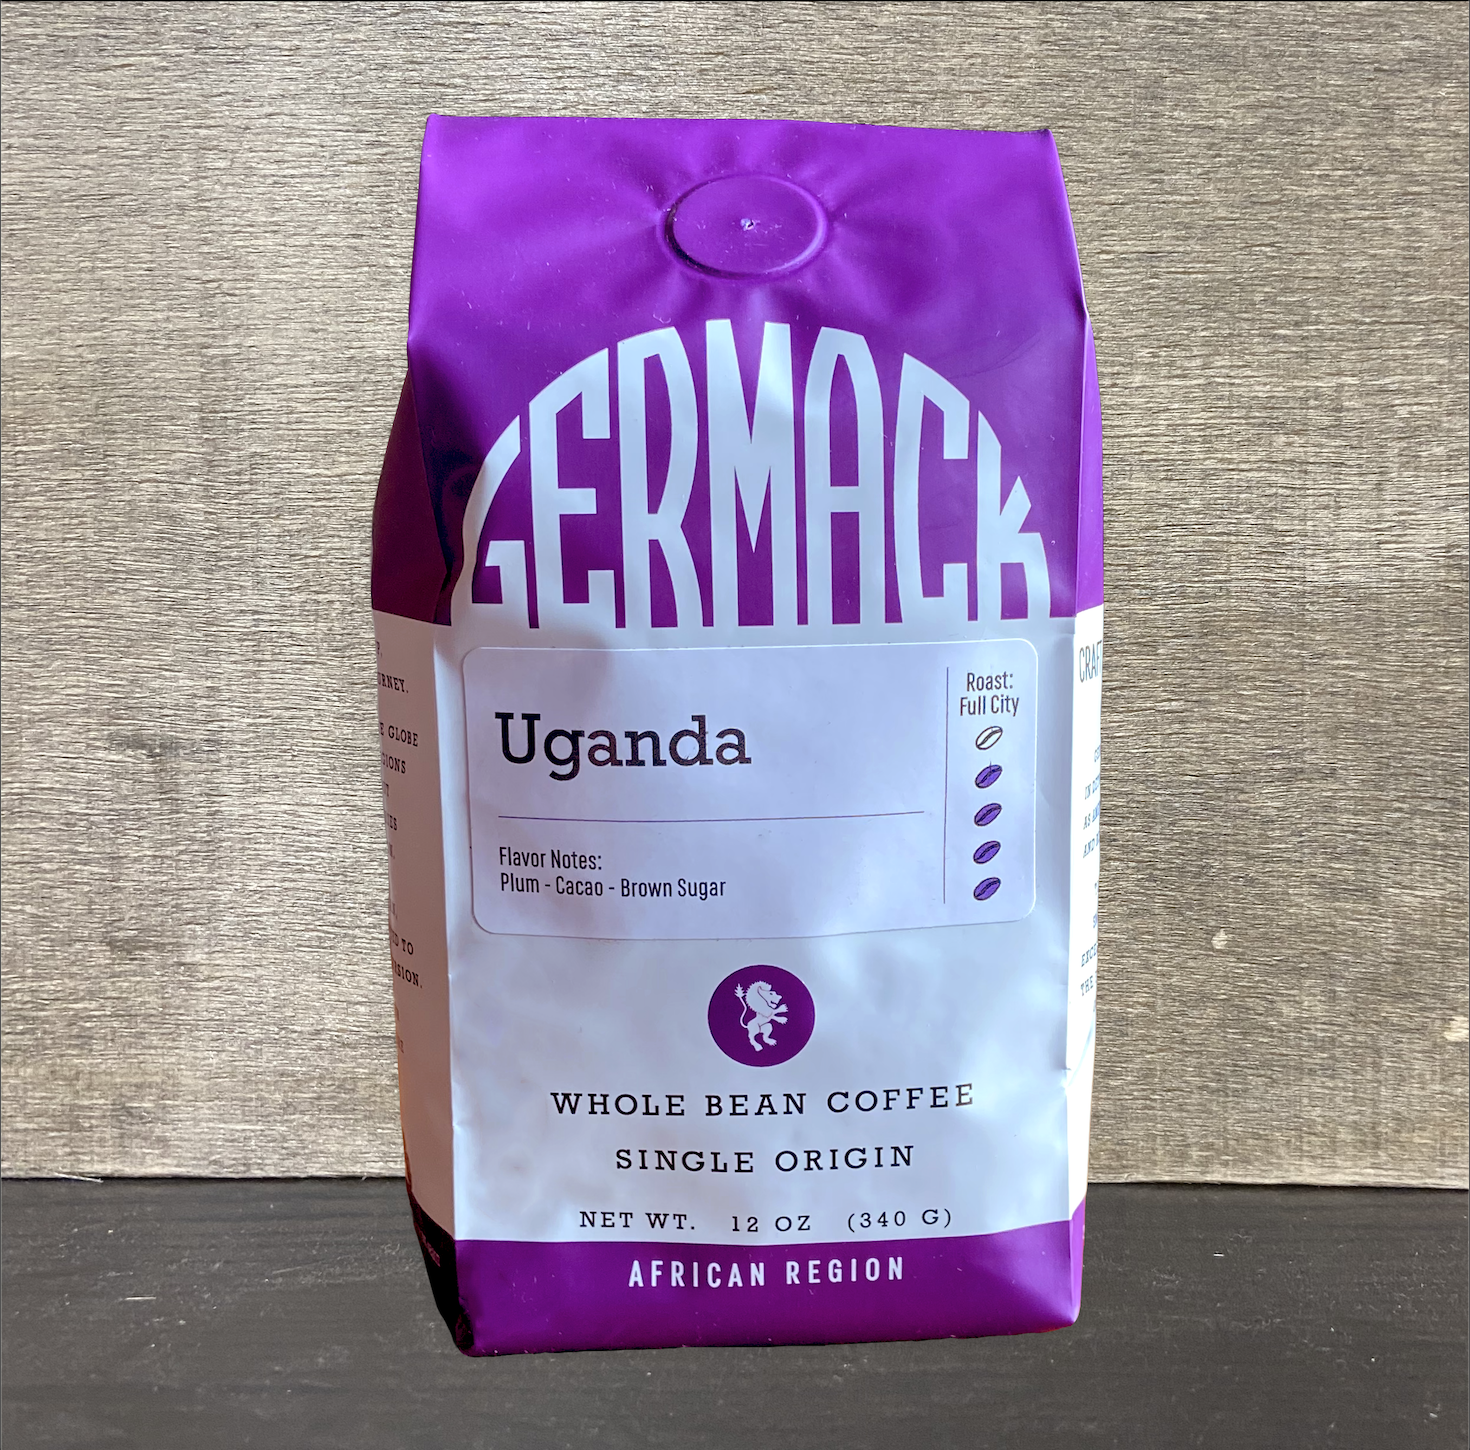 Picture Germack Coffee (12 oz.) - Uganda